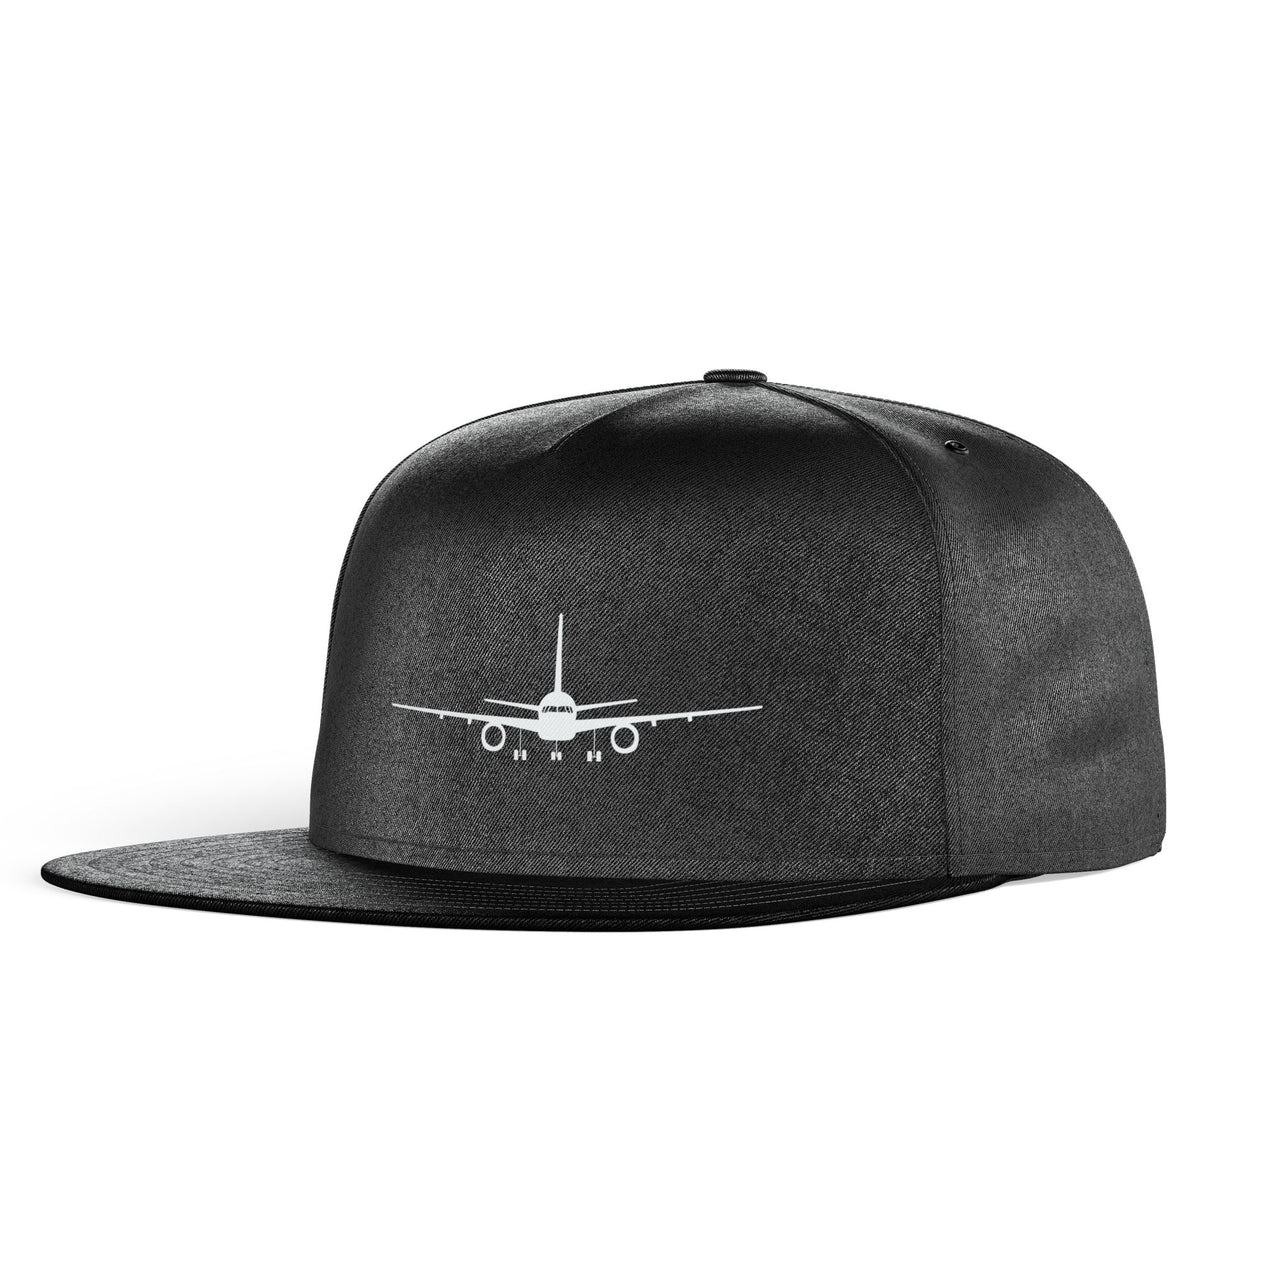 Boeing 757 Silhouette Designed Snapback Caps & Hats